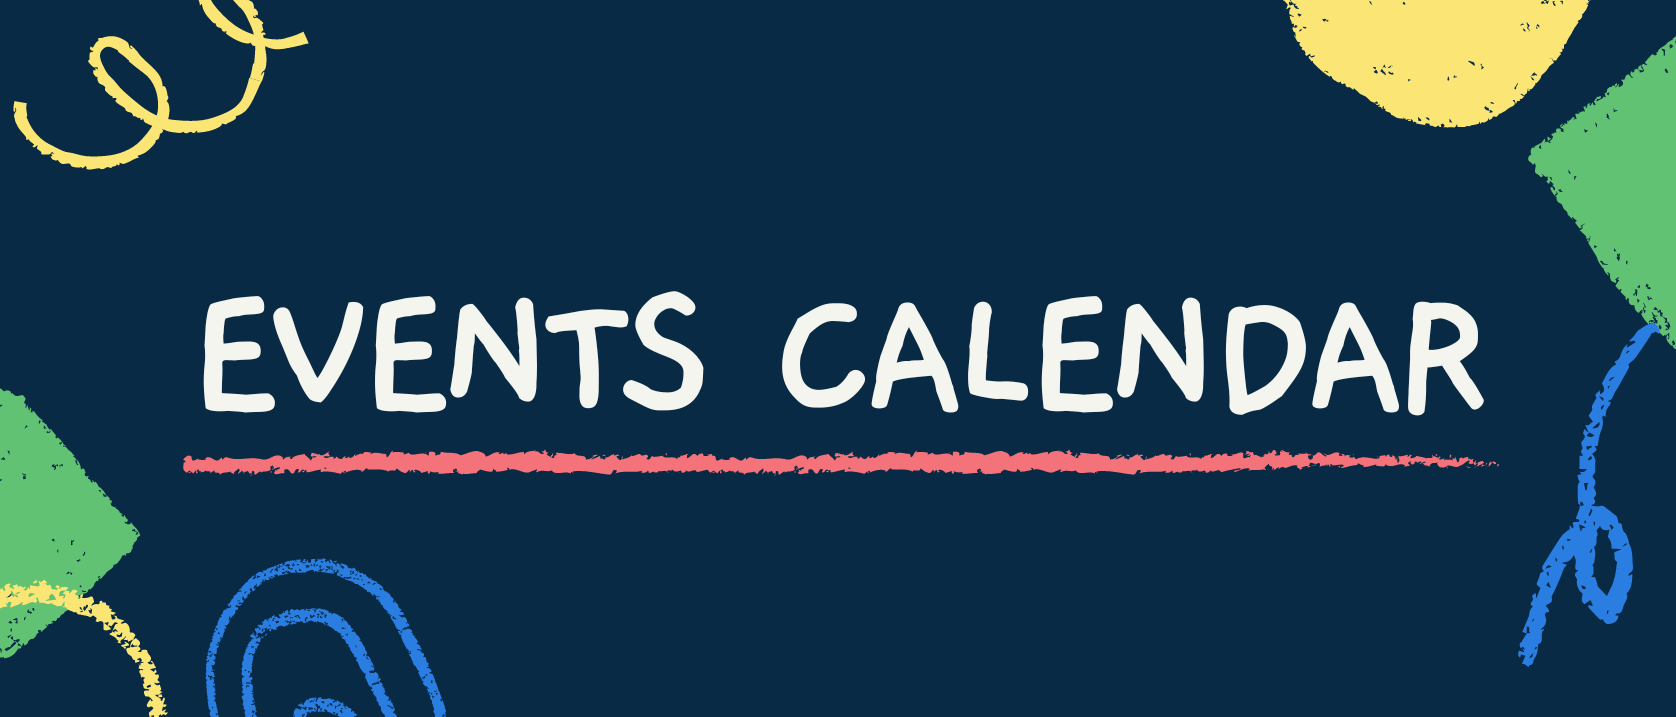 Events Calendar on dark background